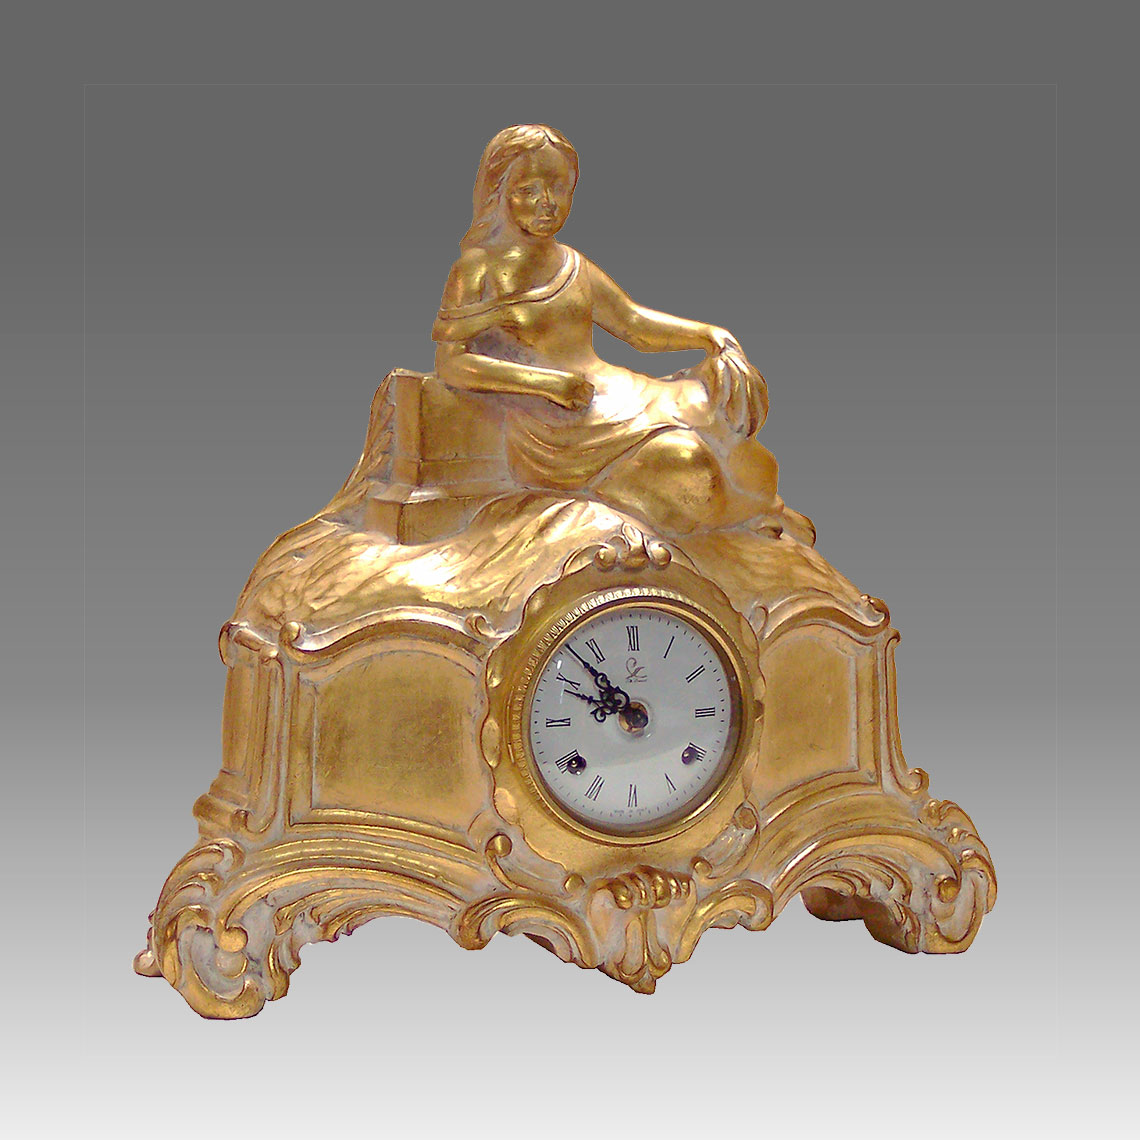 Mante Clock, Table Clock, Cimn Clock, Art.324/G in gold leafe de cape white - Bim Bam melody on Bells, white round dial